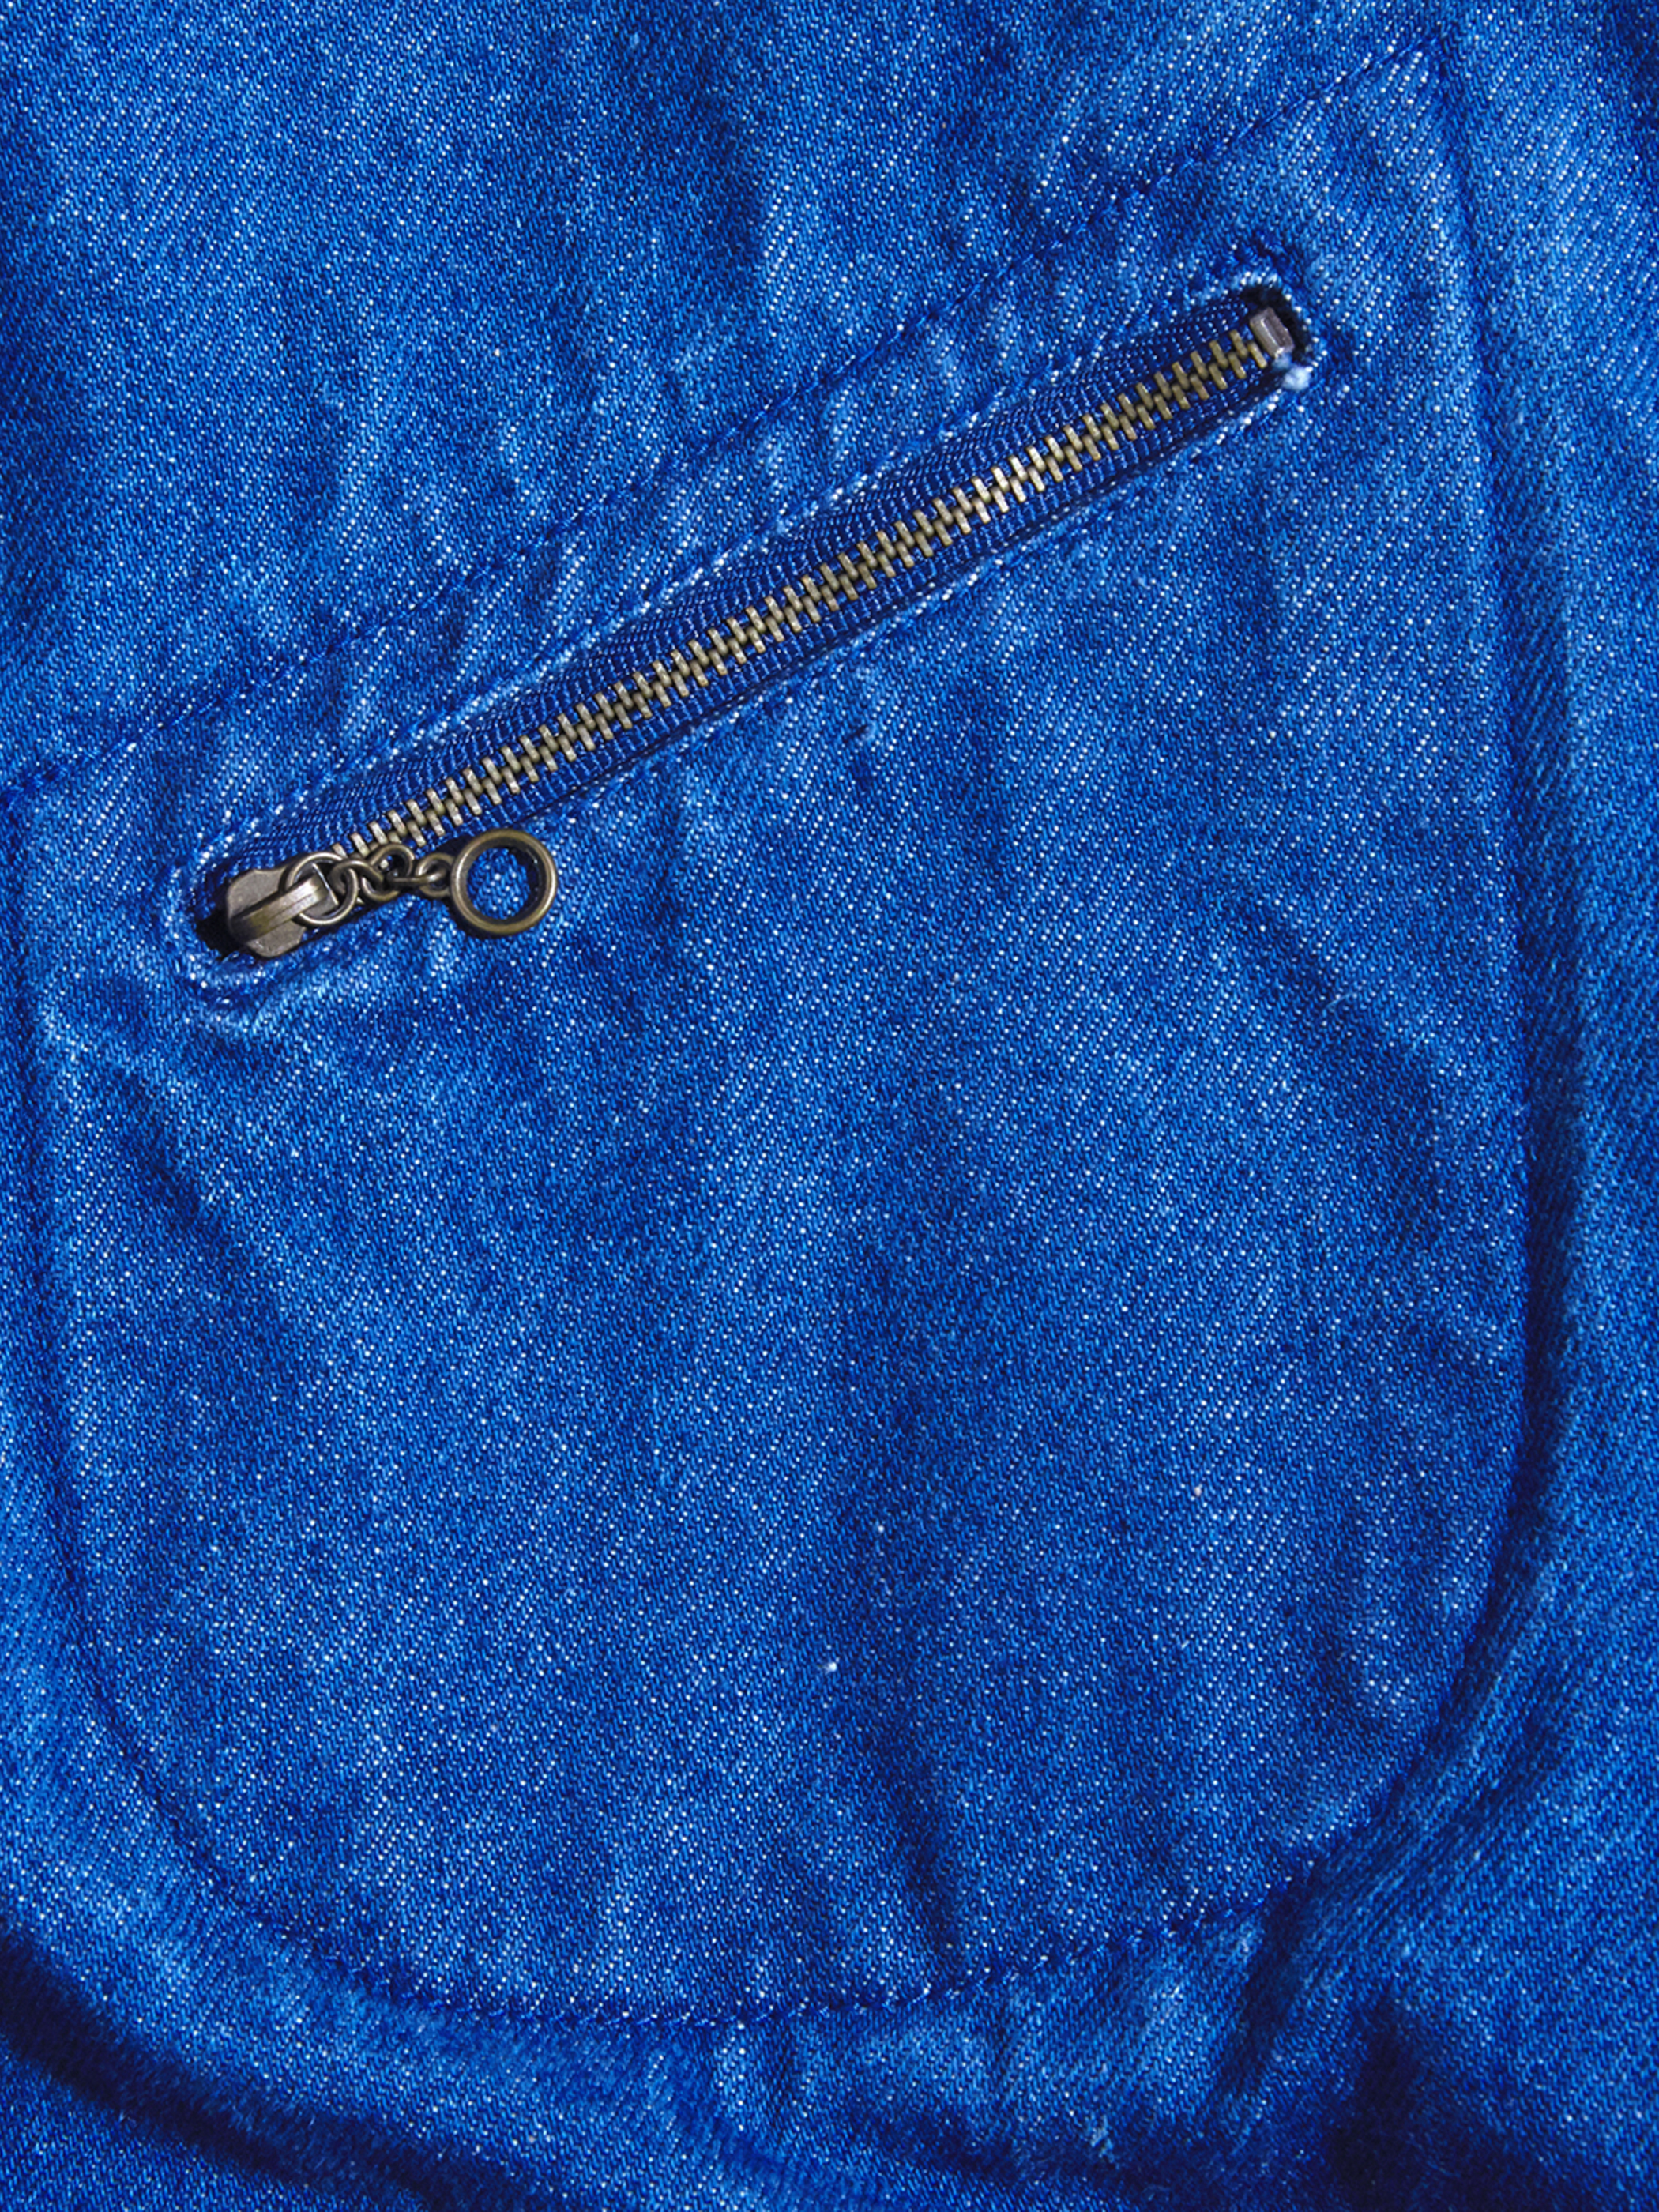 1980s "Ralph Lauren" denim work jacket -BLUE-